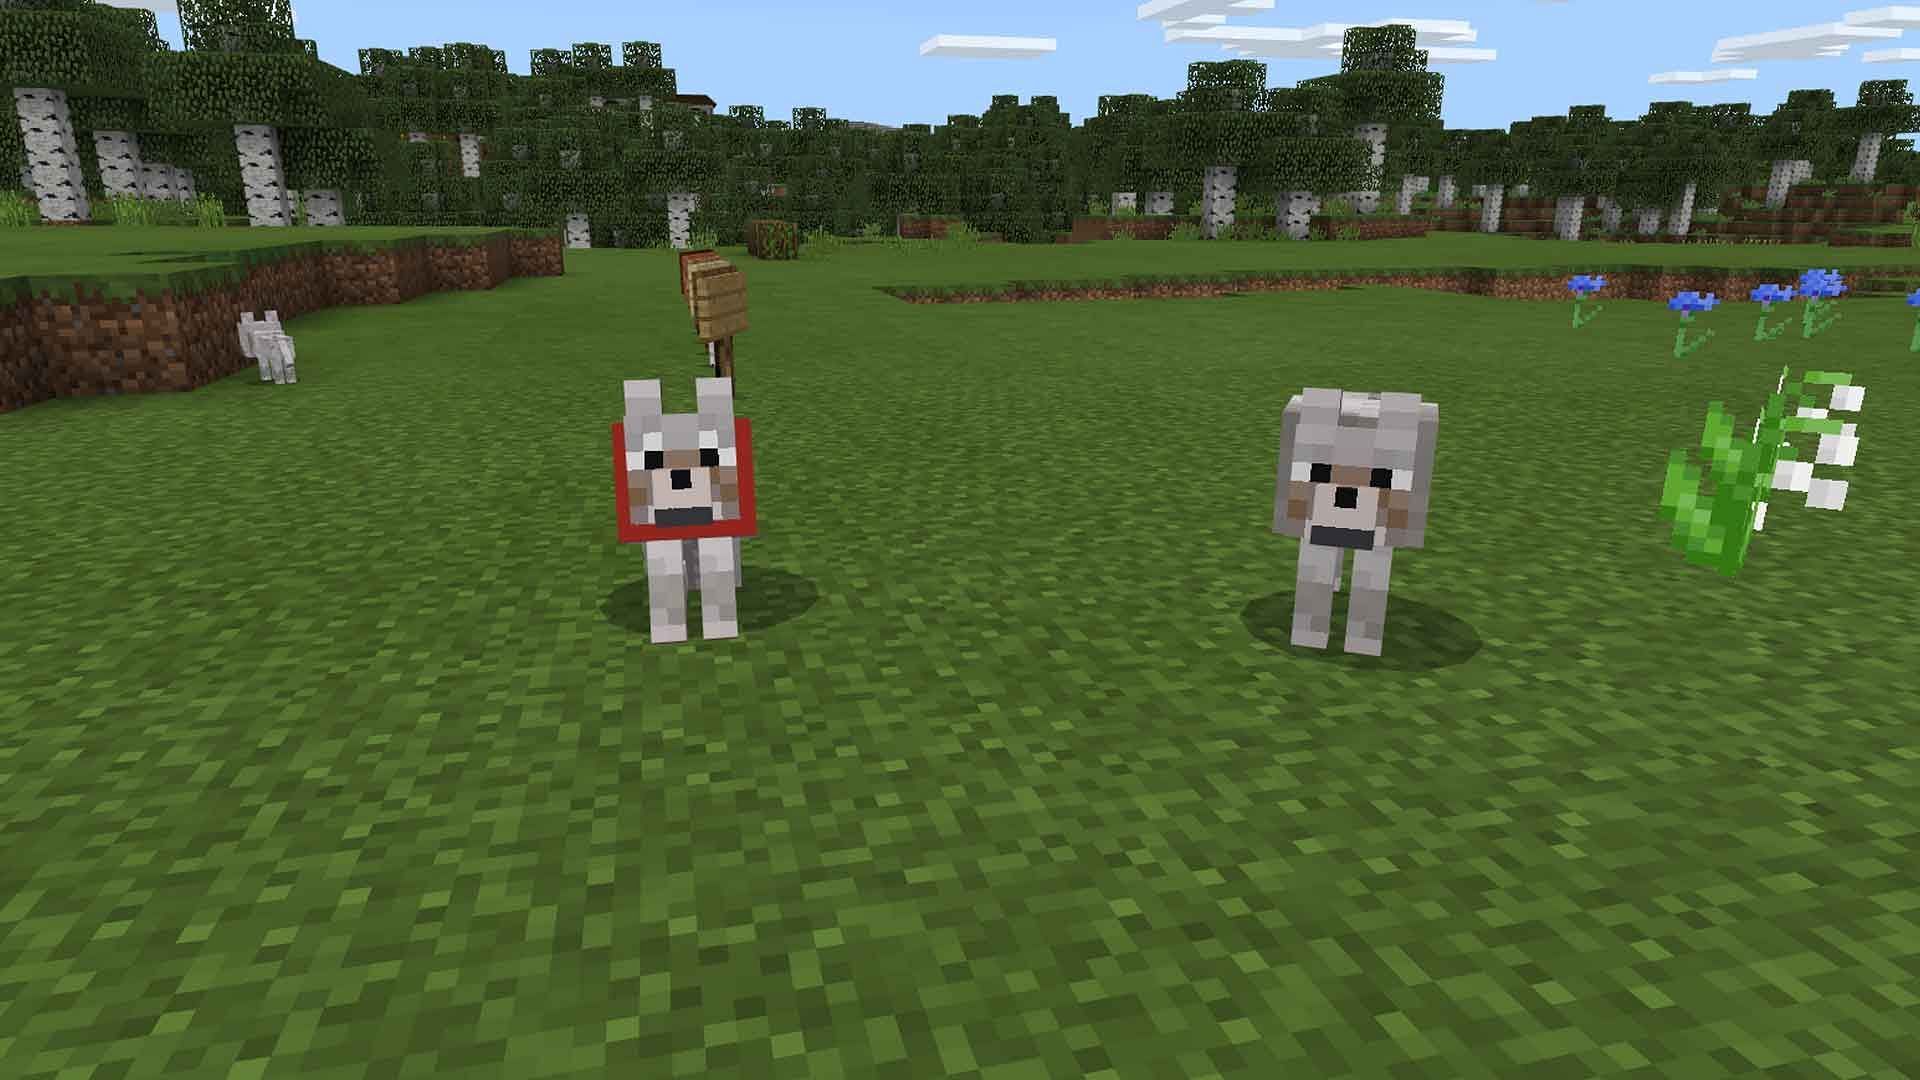 Tamed wolf vs wild wolf (Image via Minecraft)